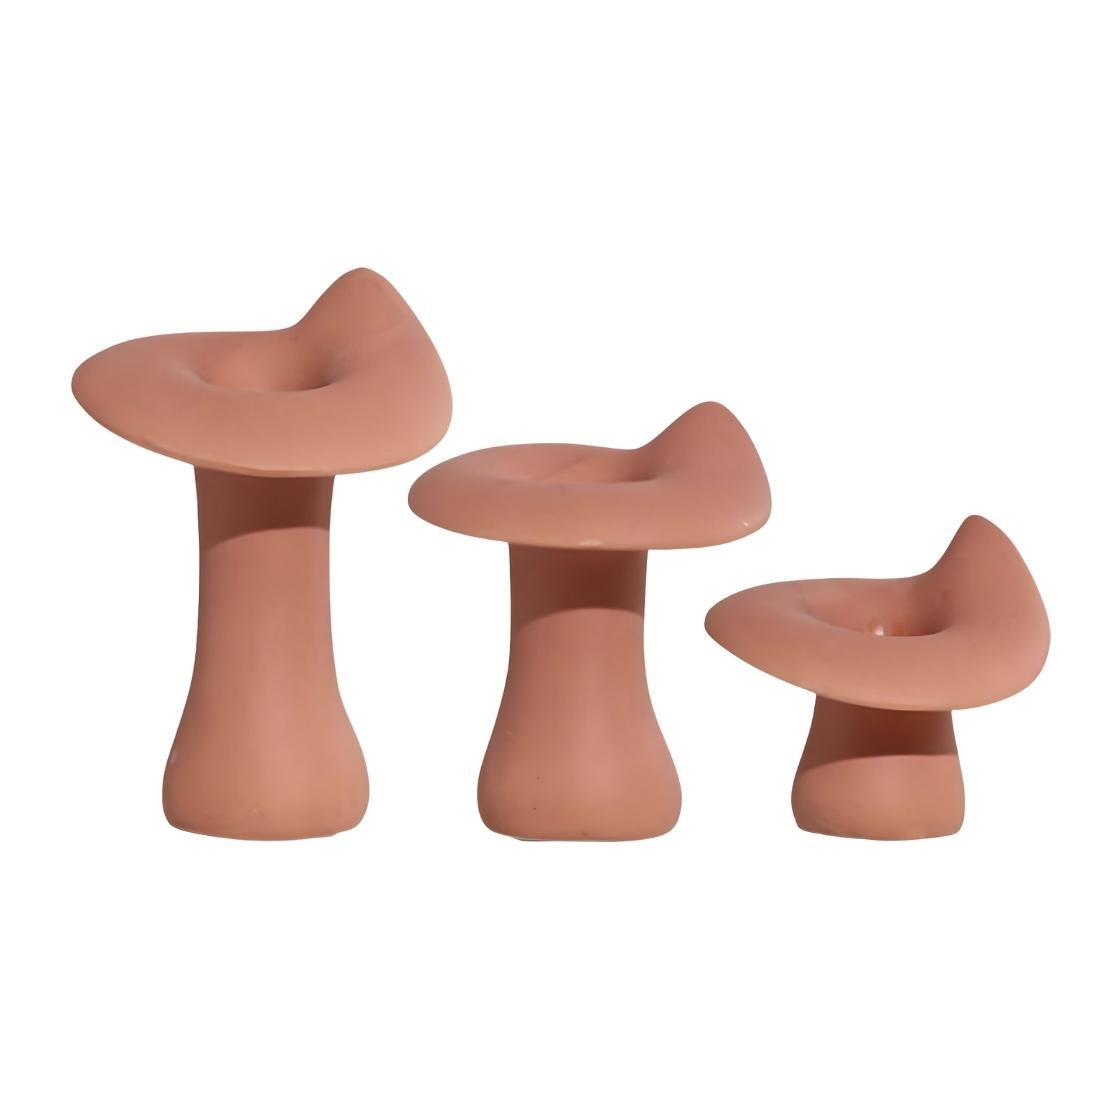 Pink, ceramic mushroom design candlestick holders in three sizes